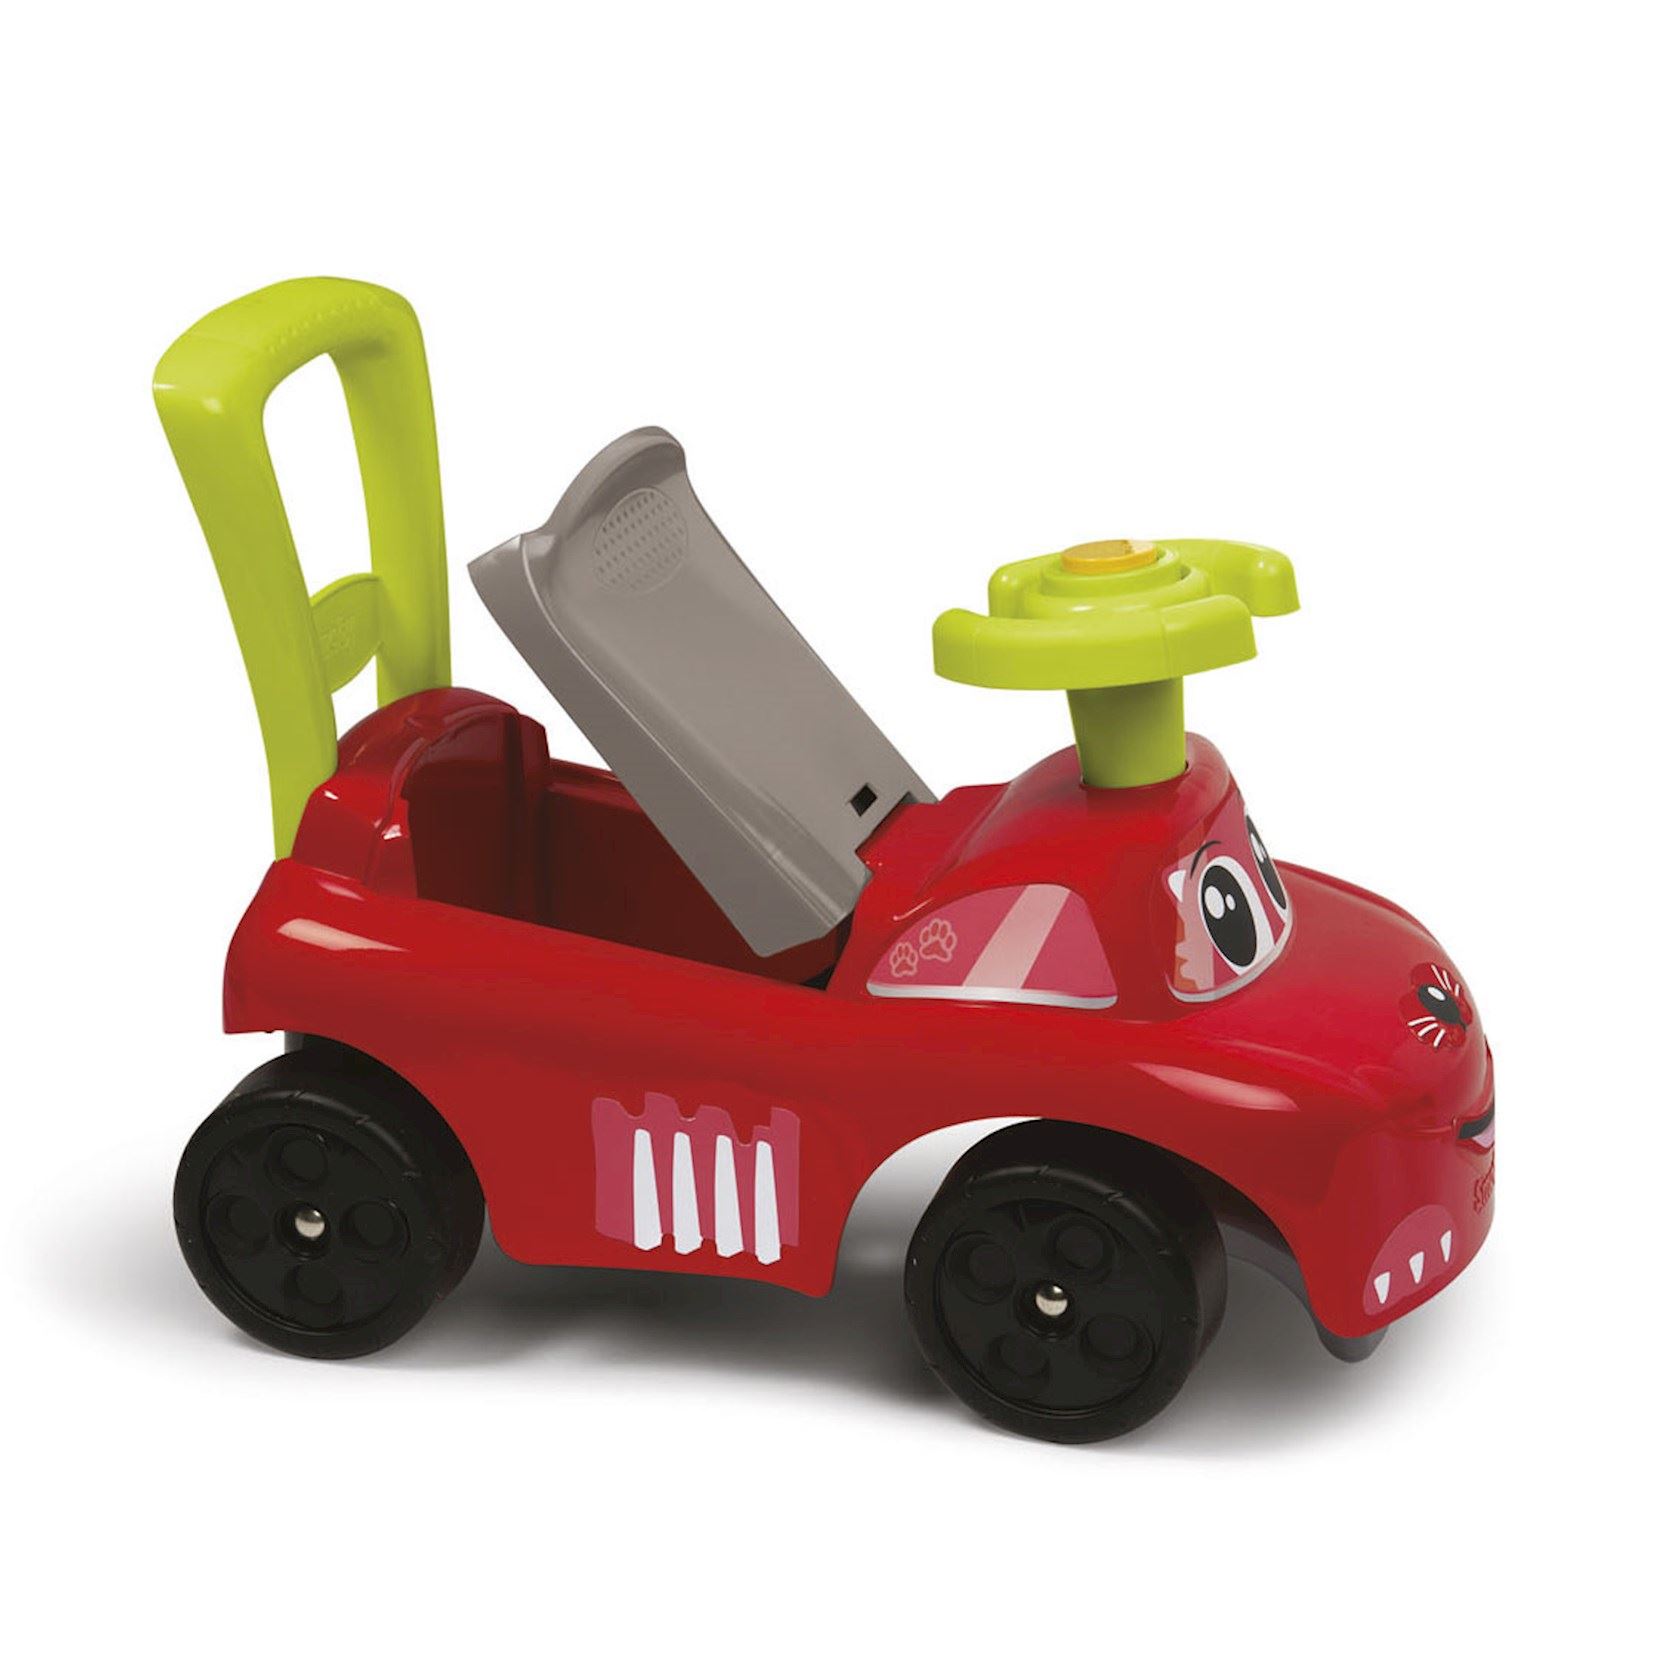 Smoby-Kids-loopauto-3-in-1-met-duwstok-en-voethouder